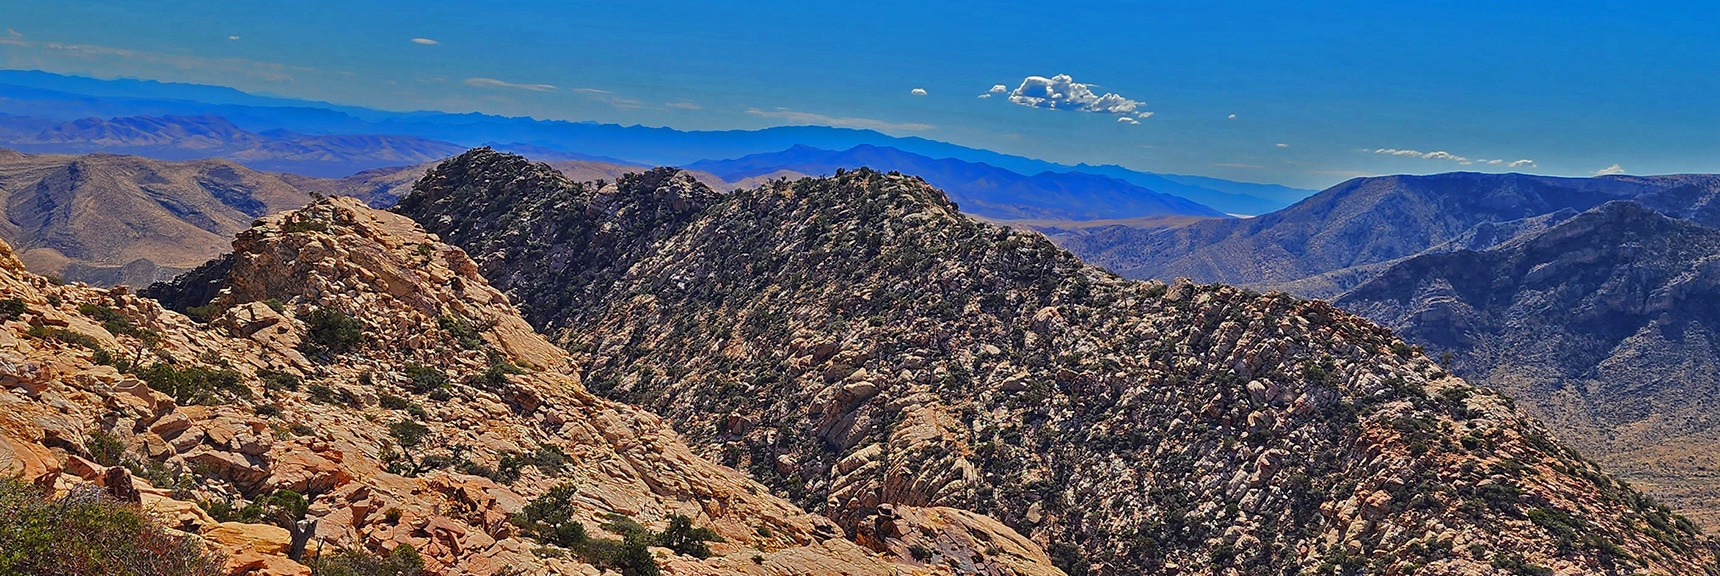 Closer View of South Peak | Hollow Rock Peak | Rainbow Mountain Wilderness, Nevada